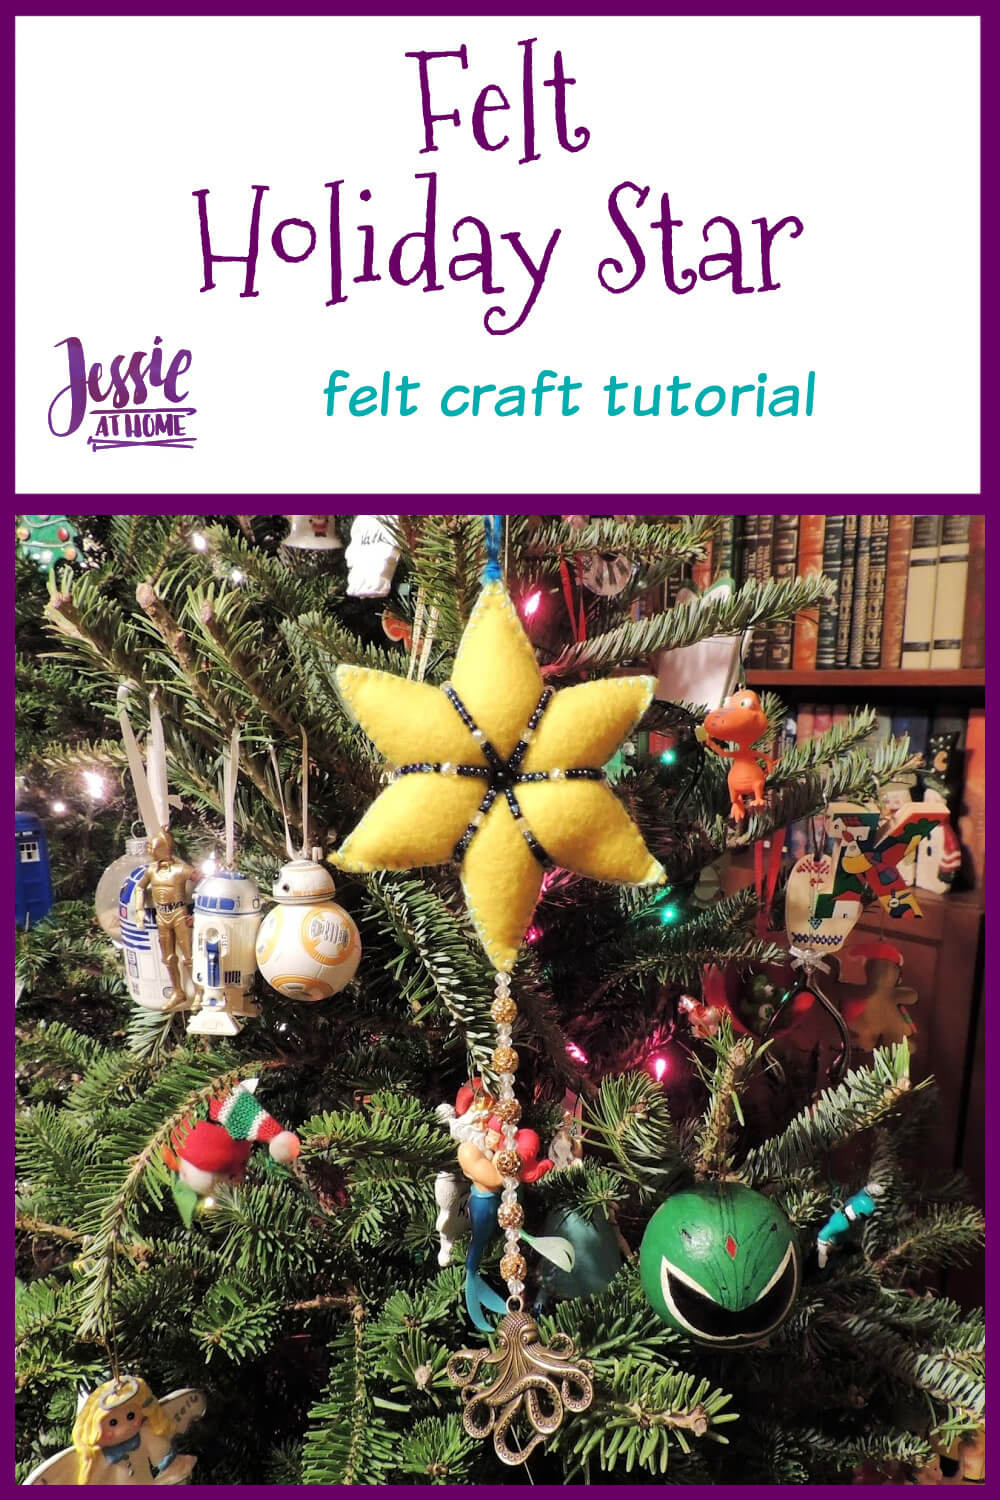 Felt Holiday Star - Felt Craft Tutorial by Jessie At Home - Pin 1